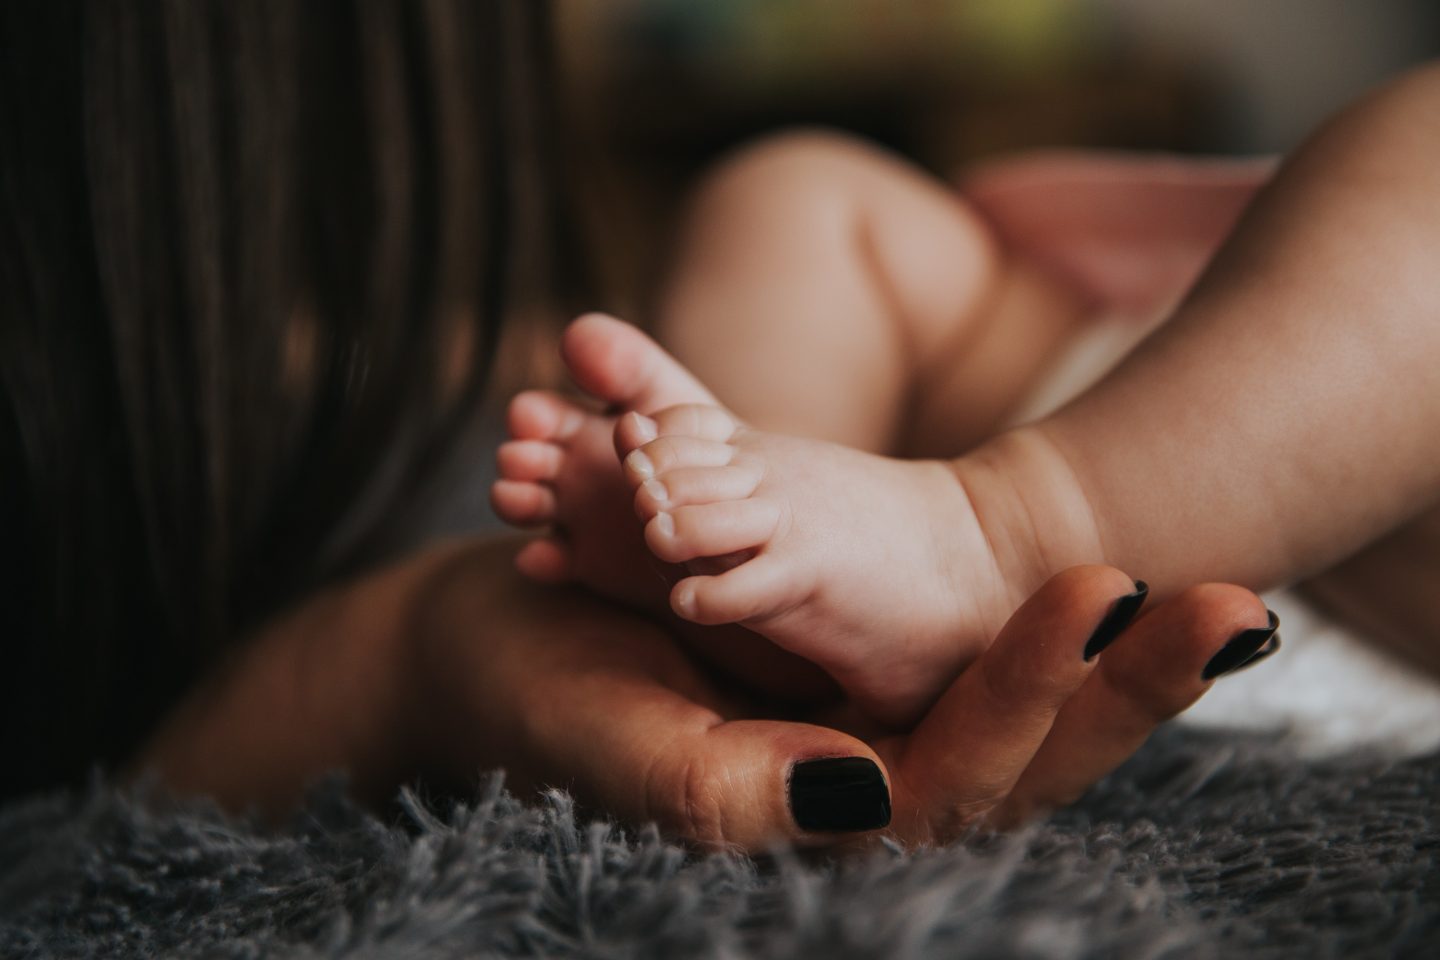 hand holding baby feet